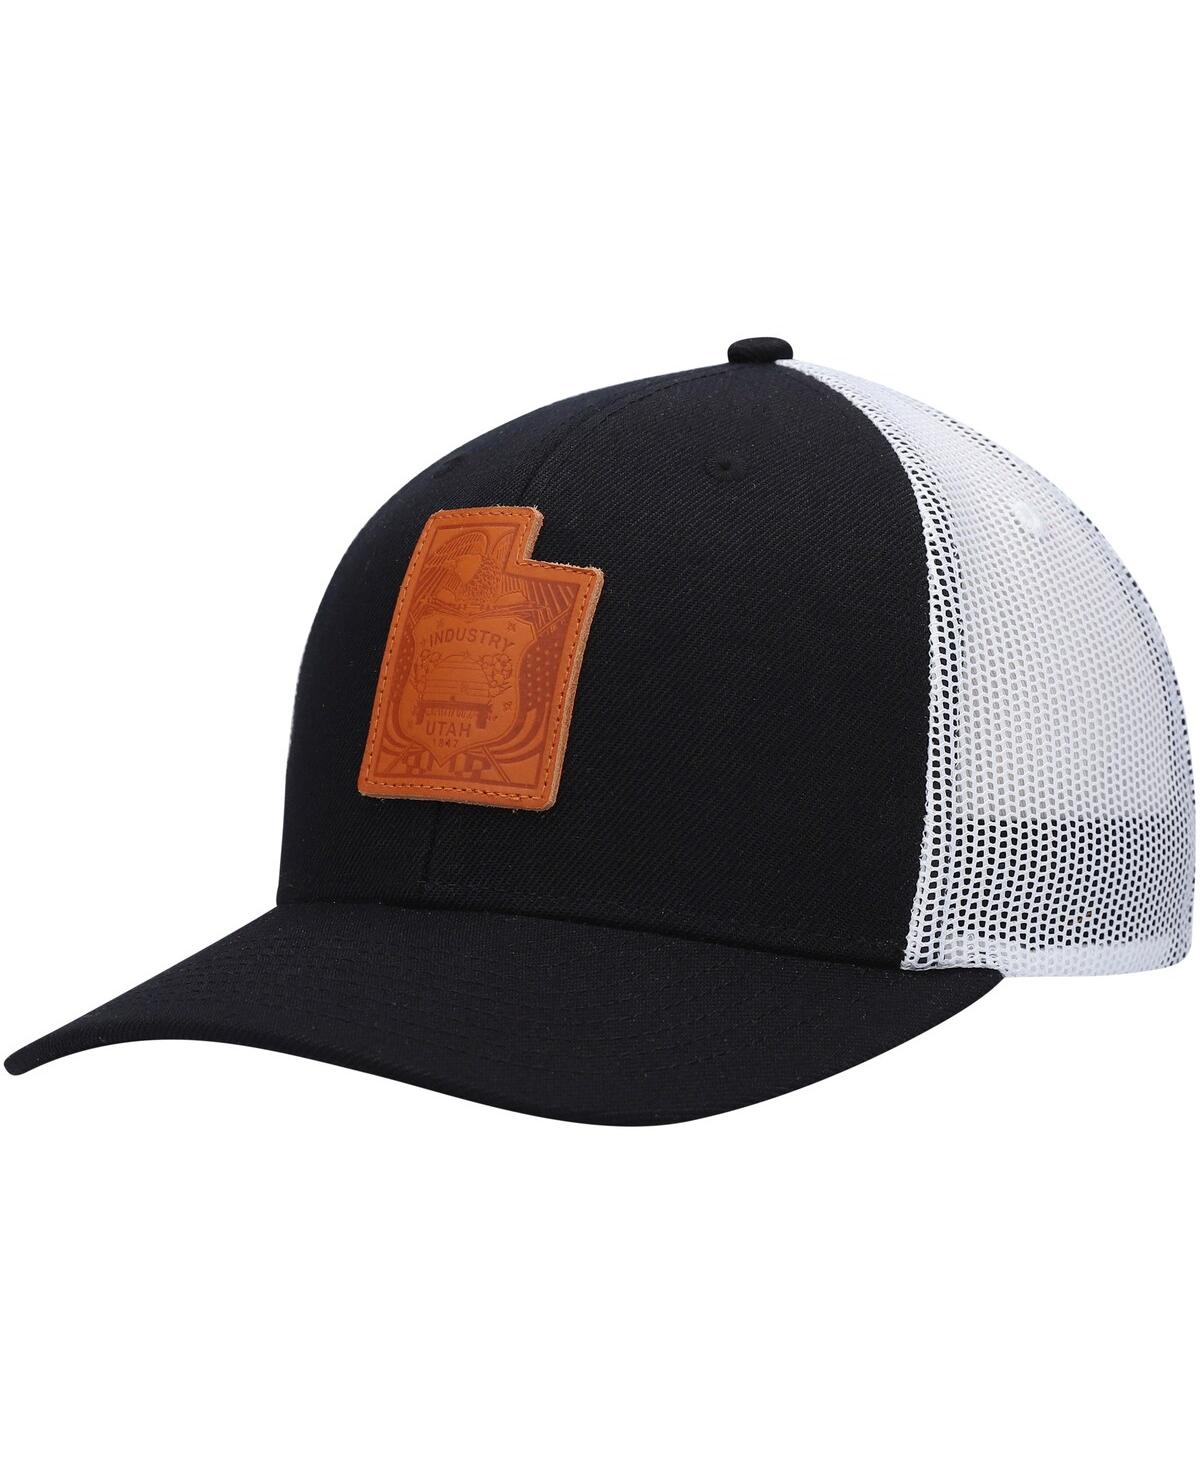 Shop Local Crowns Men's  Black Utah Leather State Applique Trucker Snapback Hat